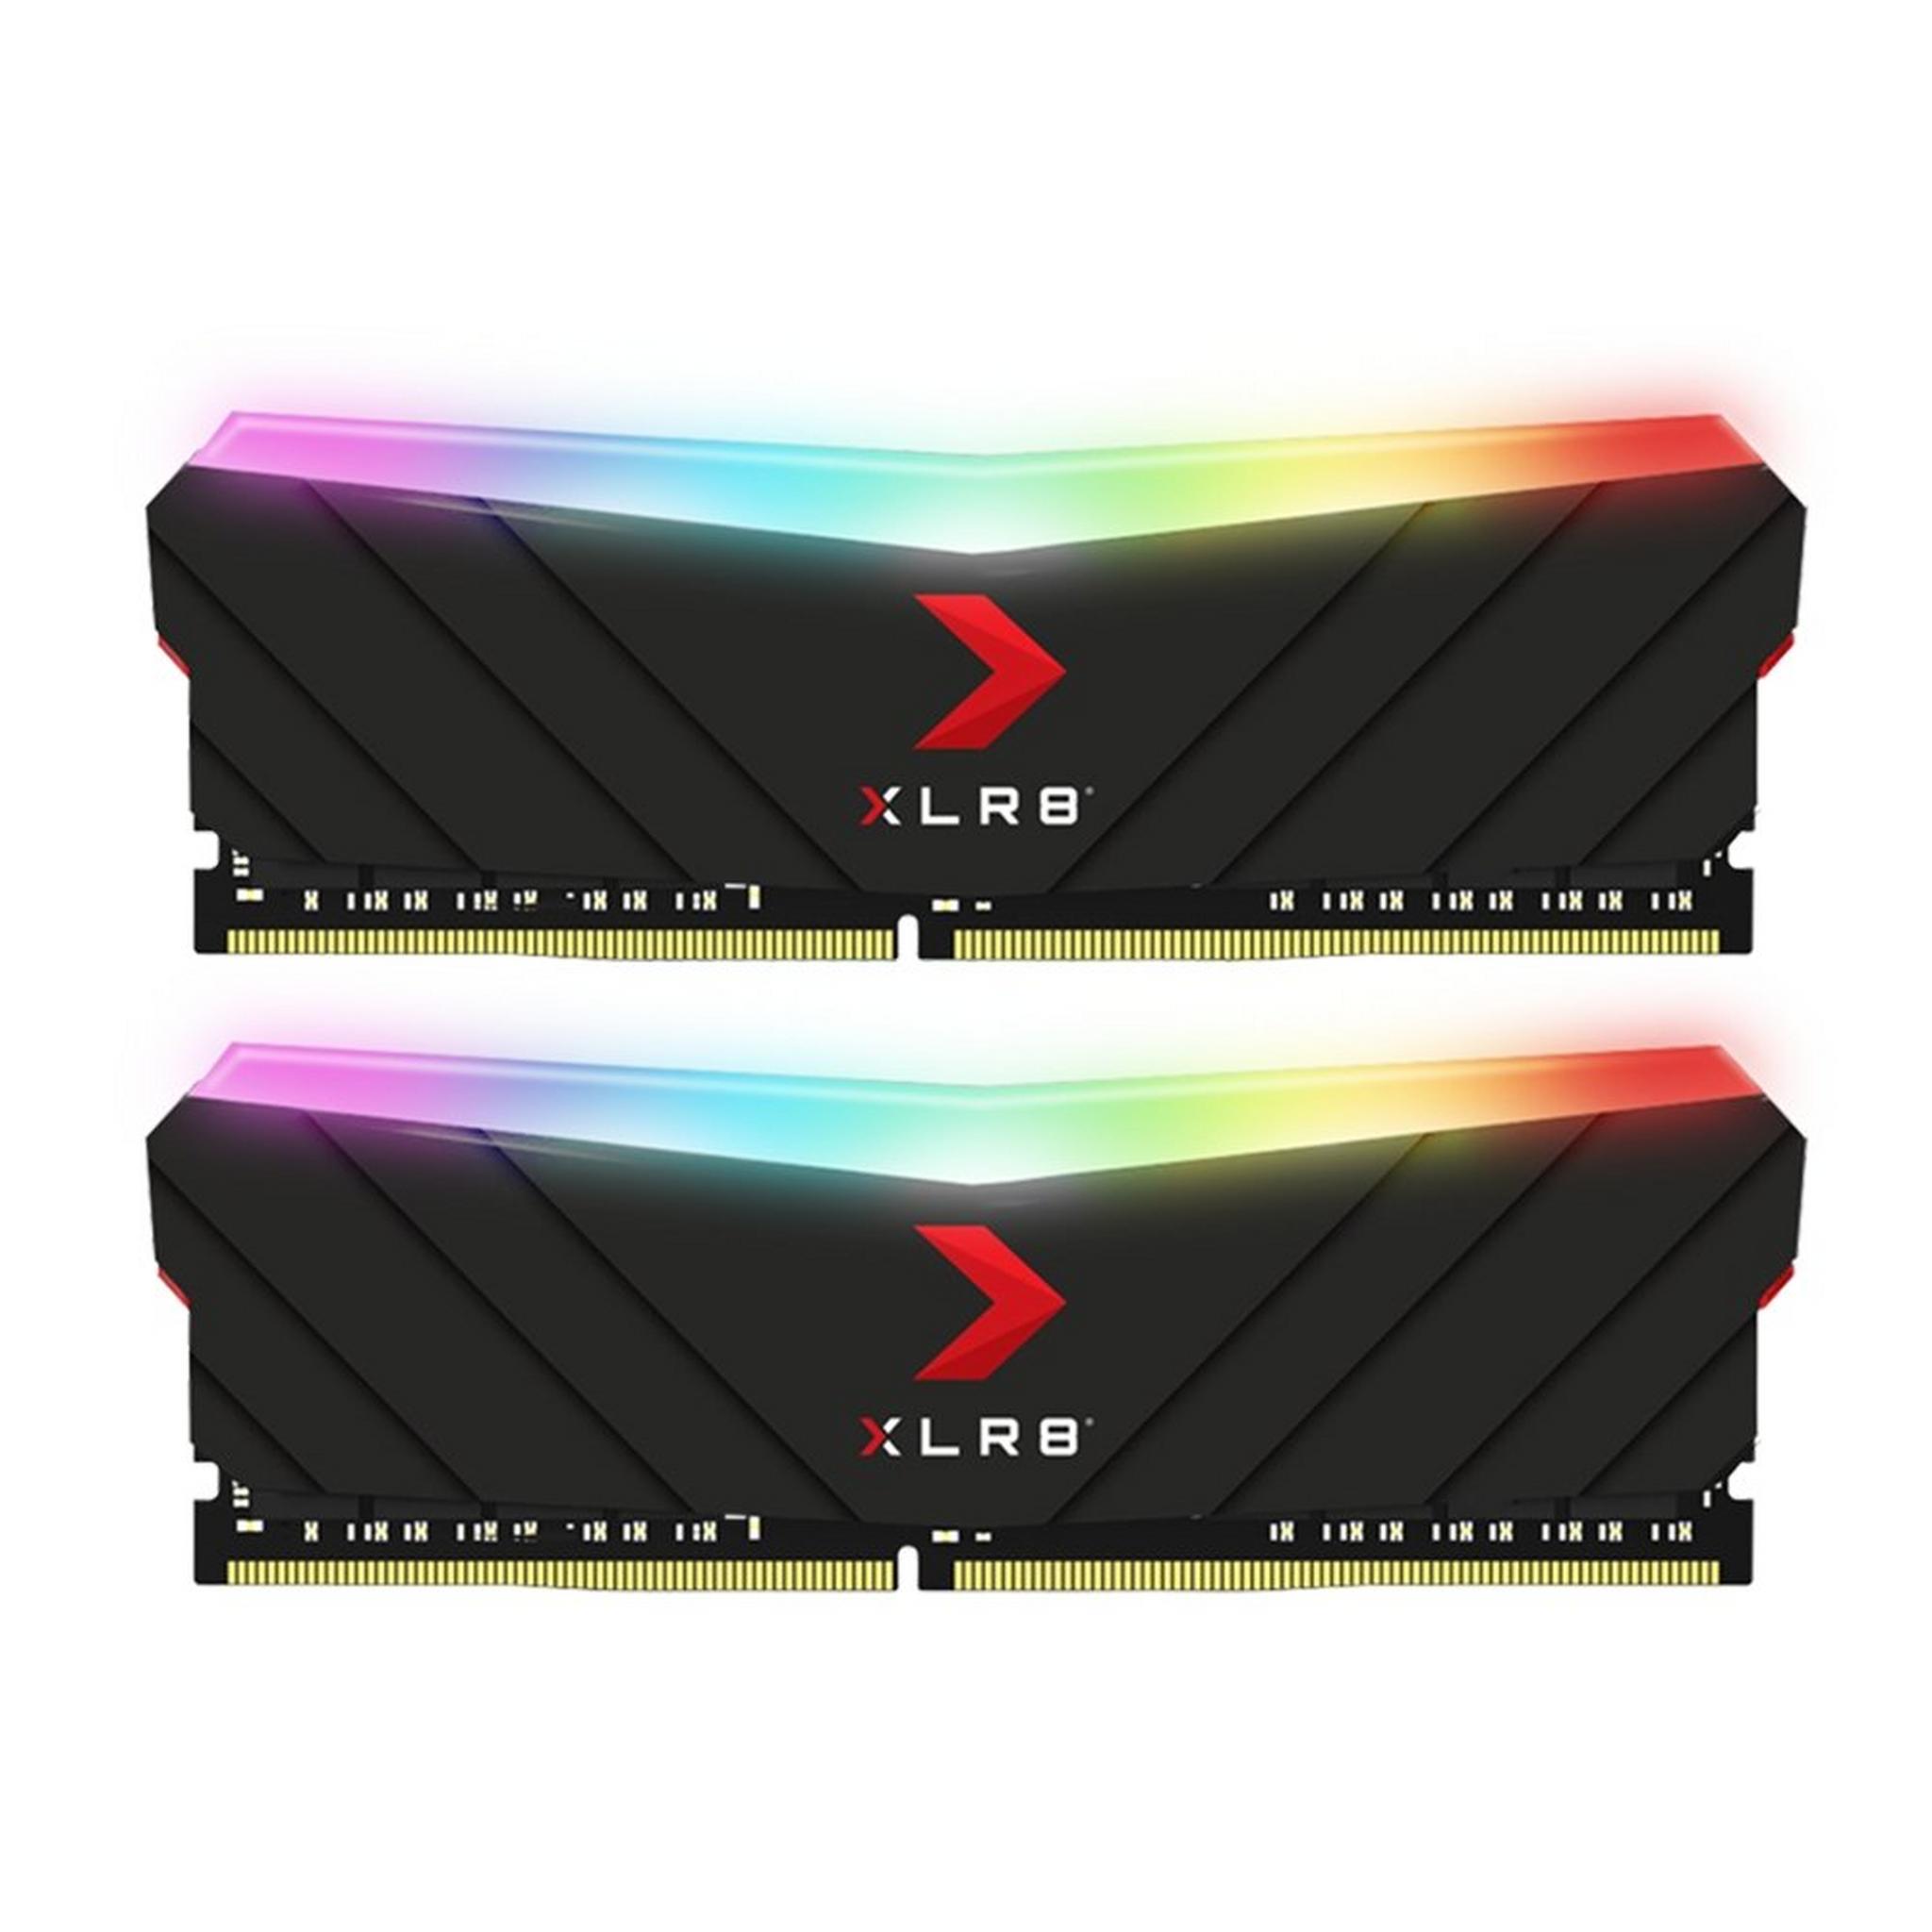 PNY XLR8 Epic X RGB-DDR4 3200mHz 2*16GB Gaming Desktop Memory - Black